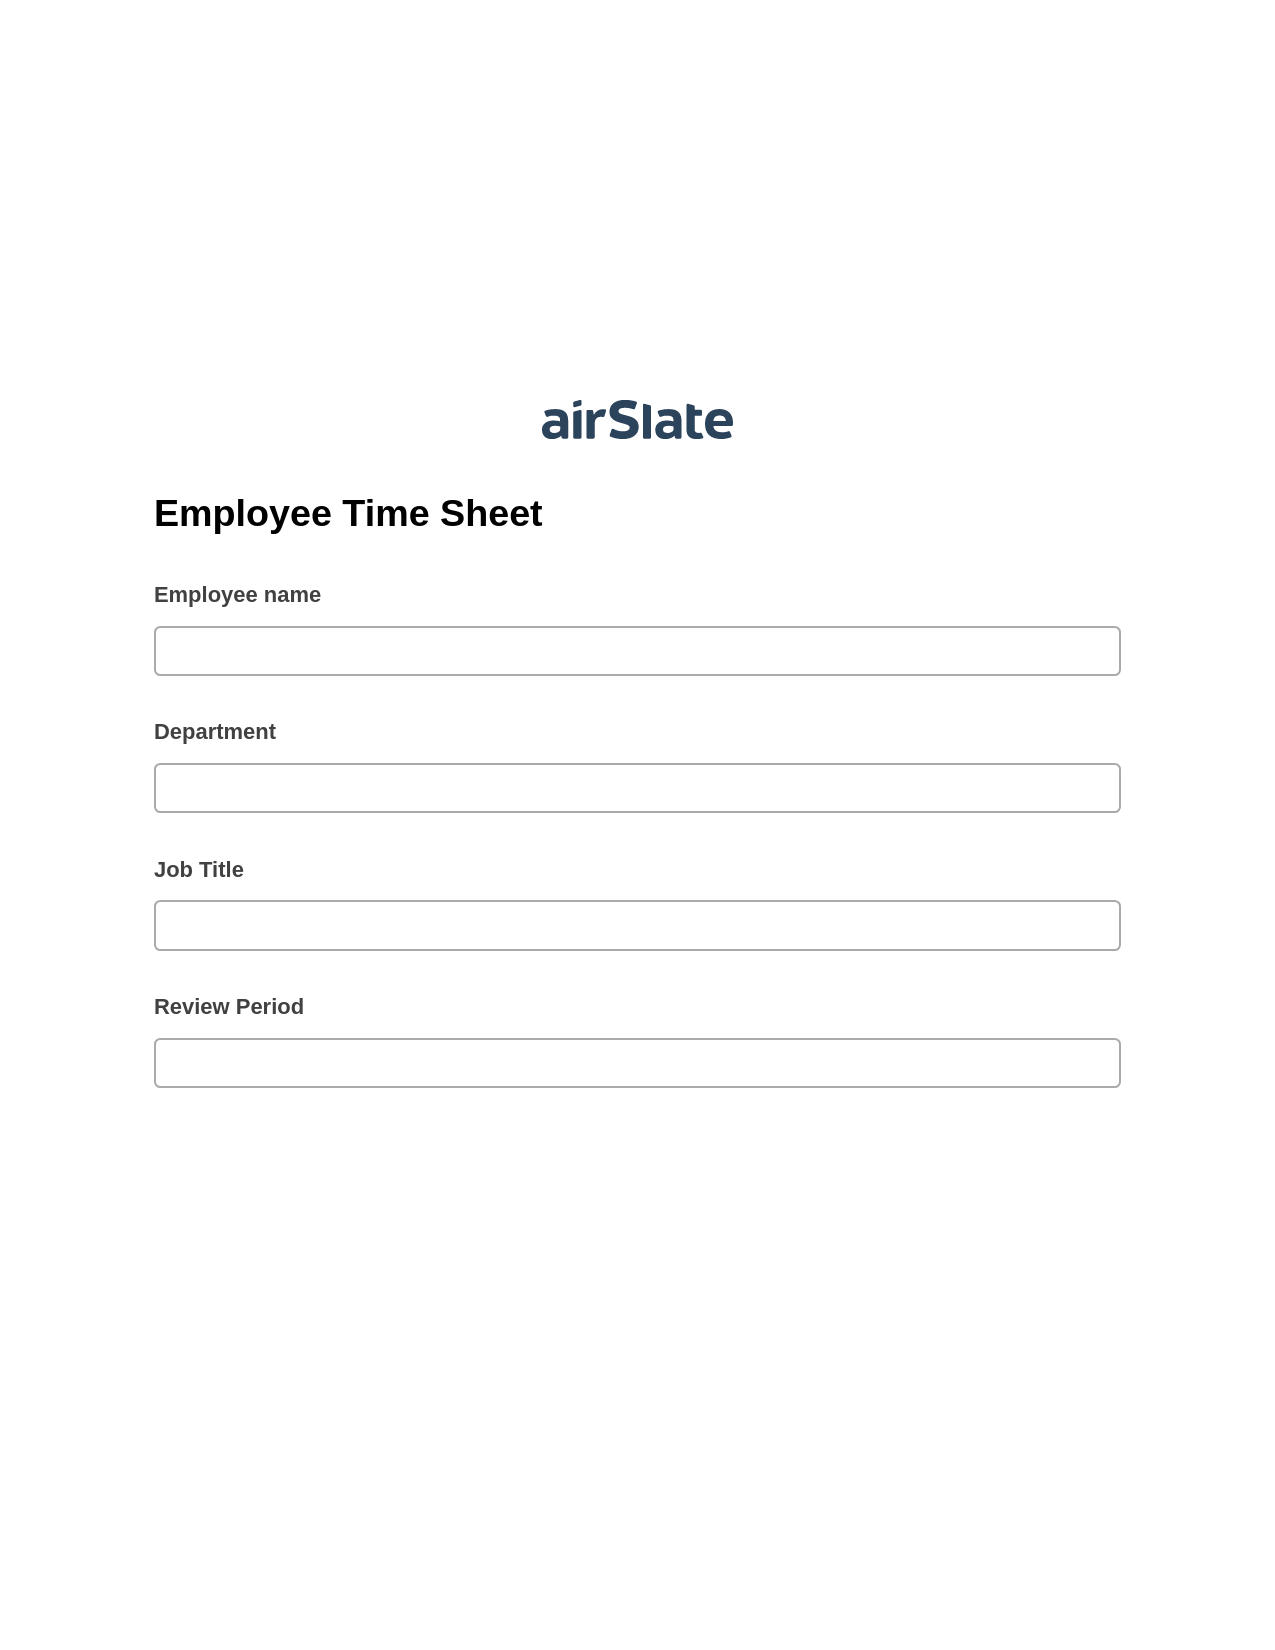 Multirole Employee Time Sheet Prefill from NetSuite records, Google Calendar Bot, Archive to SharePoint Folder Bot